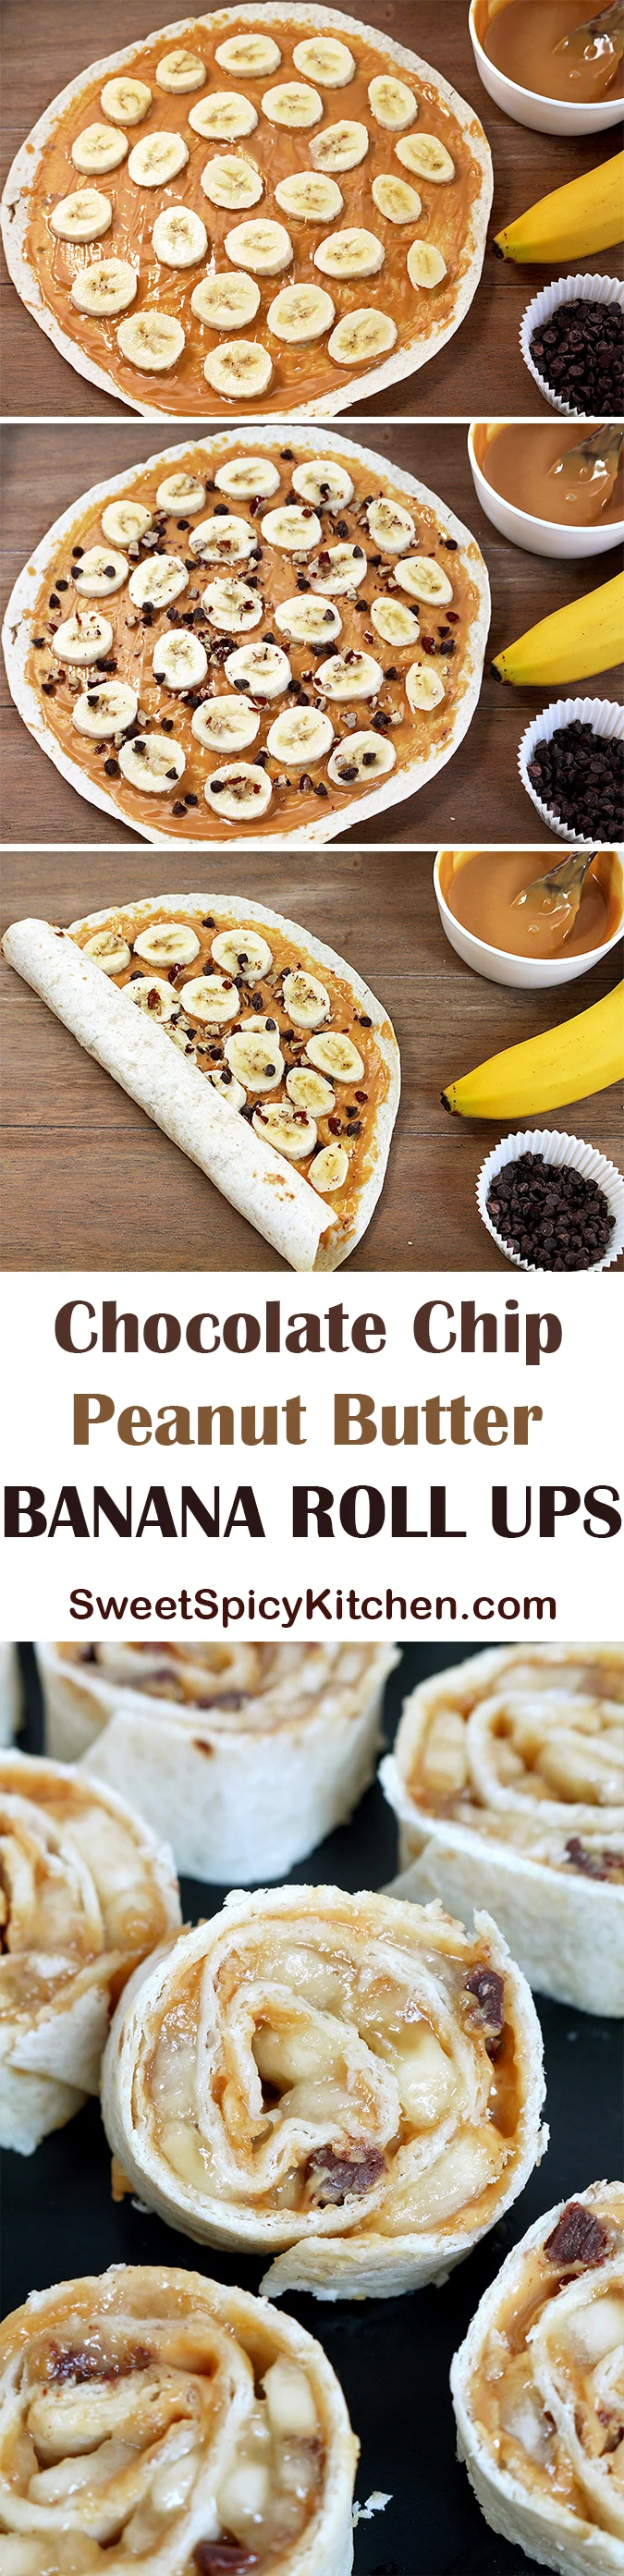 Chocolate Chip Peanut Butter Banana Roll Ups